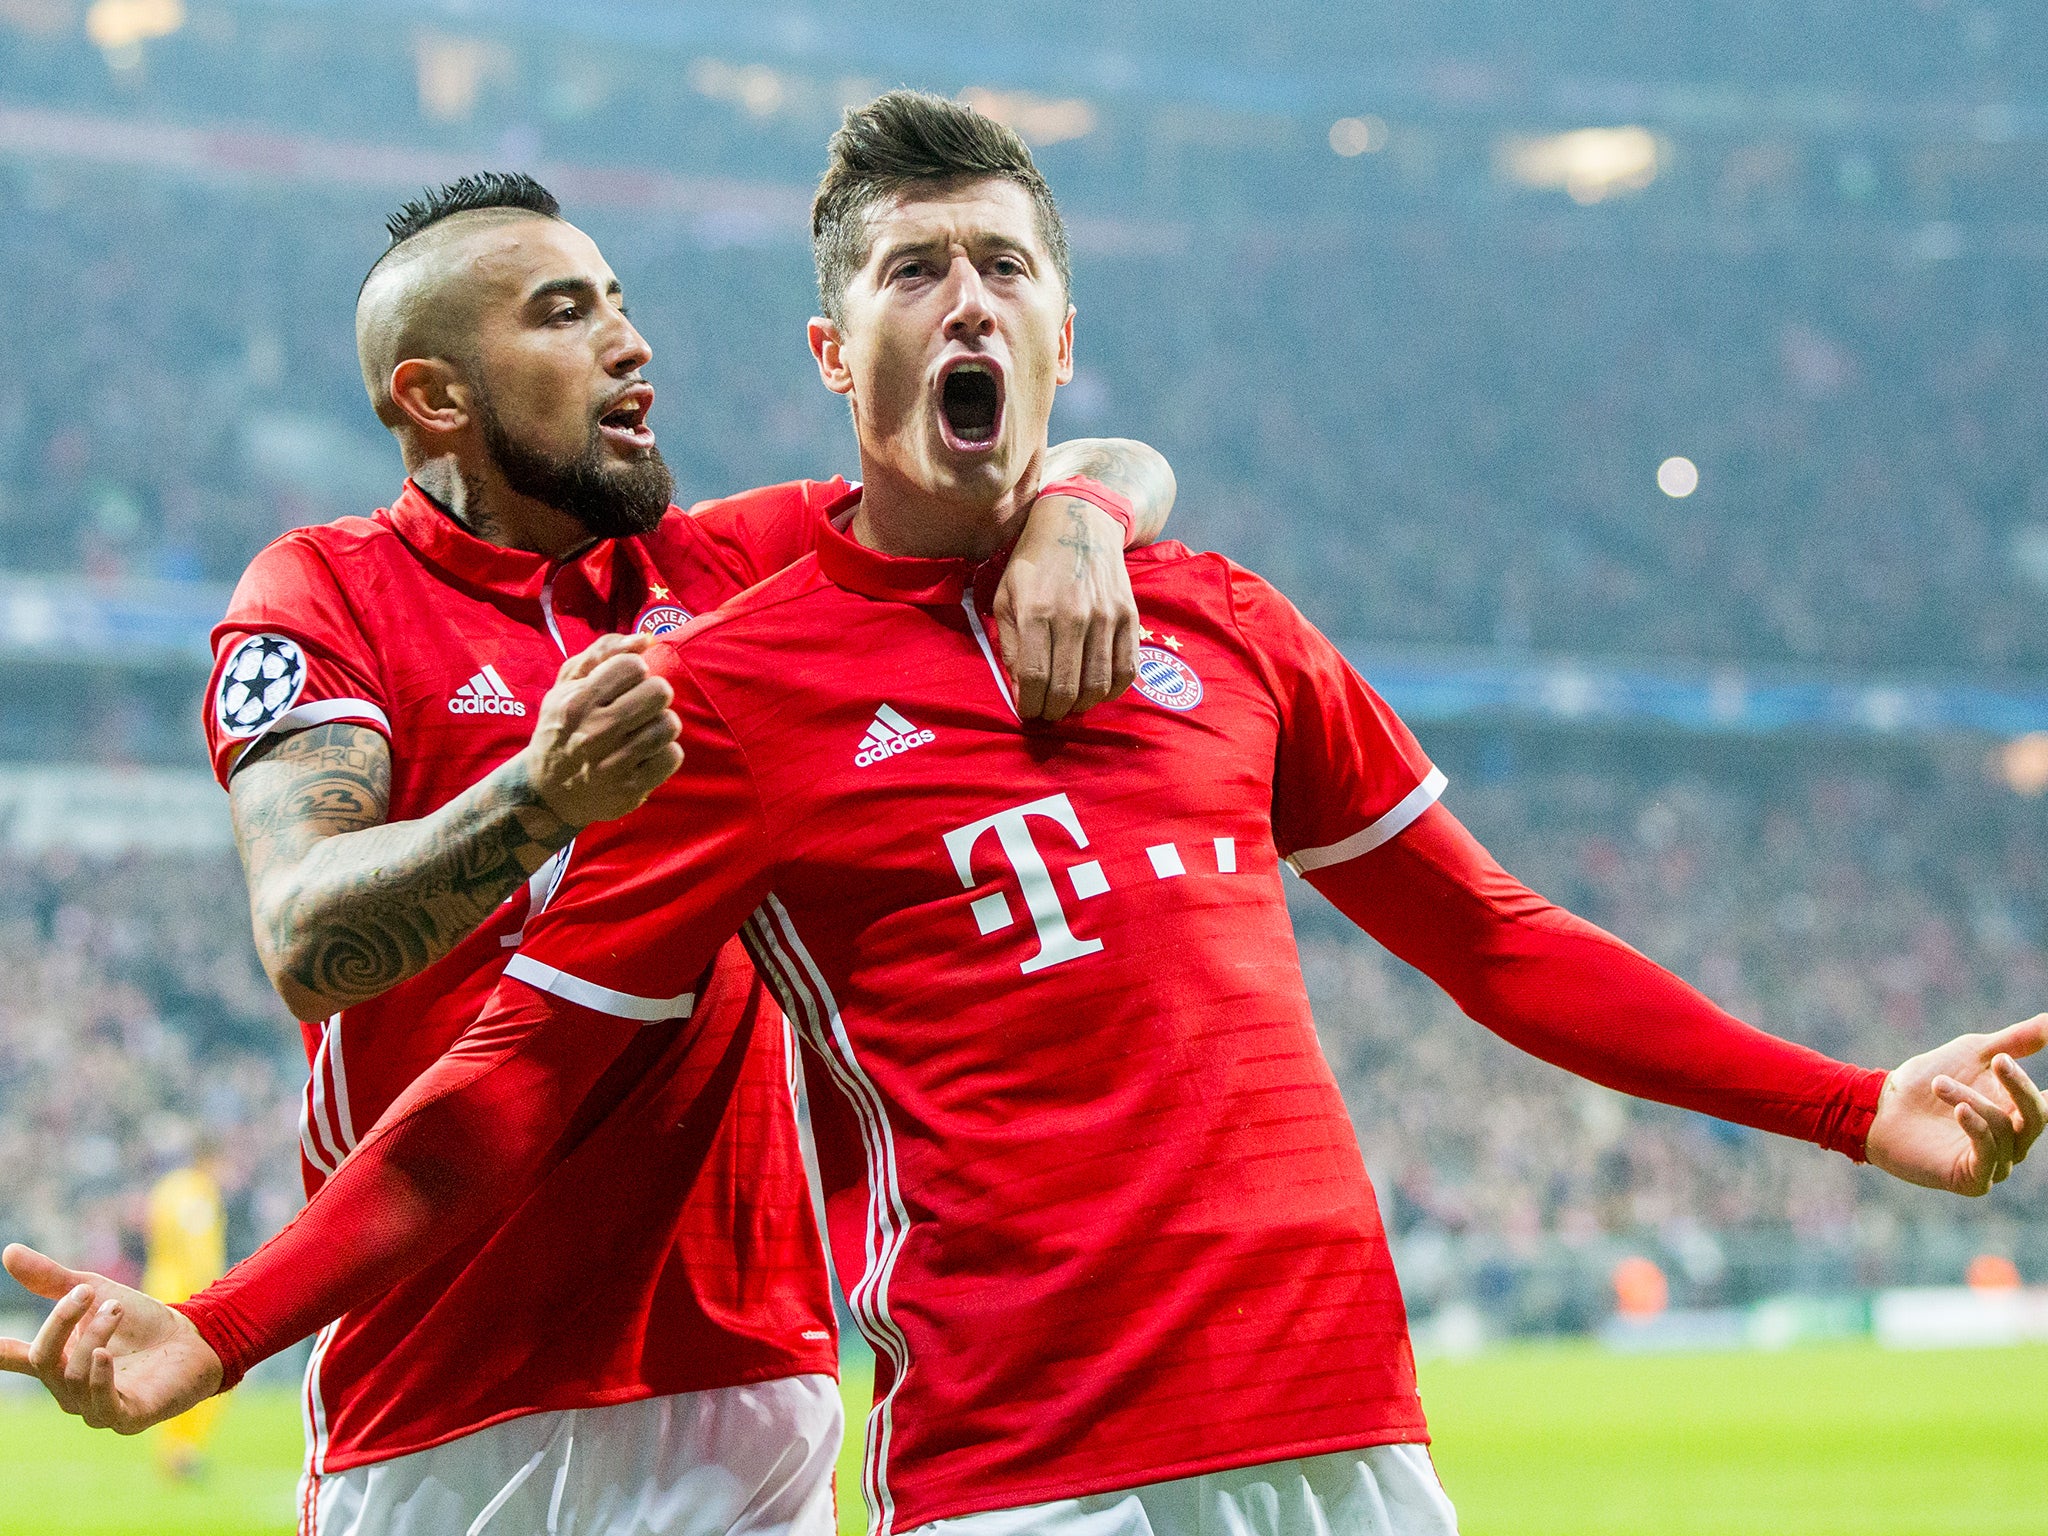 Robert Lewandowski's towering header restored Bayern's lead in the second half